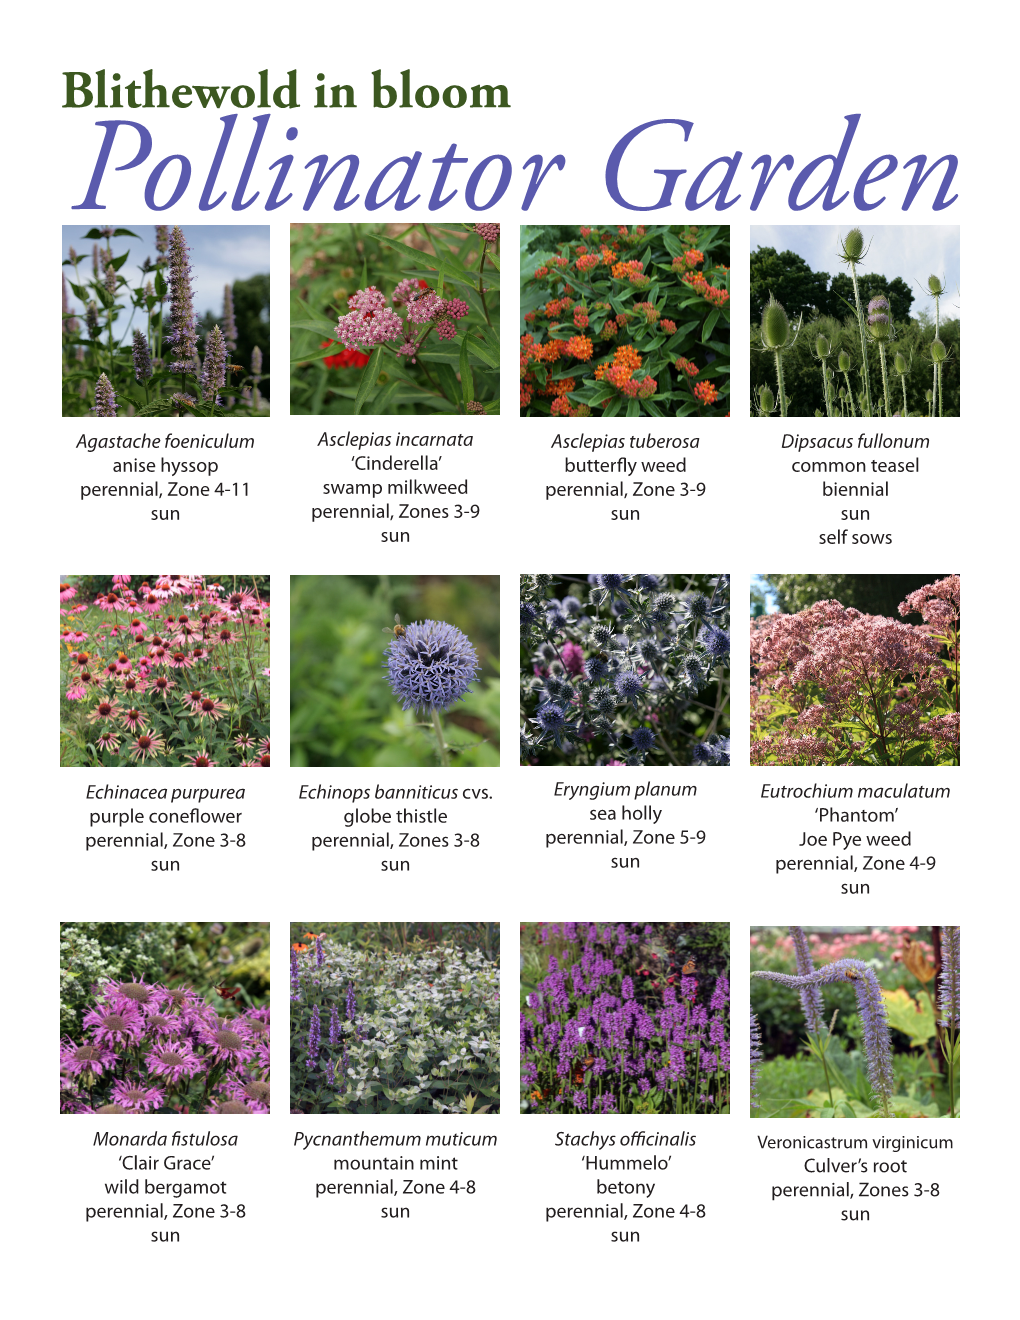 Blithewold in Bloom Pollinator Garden